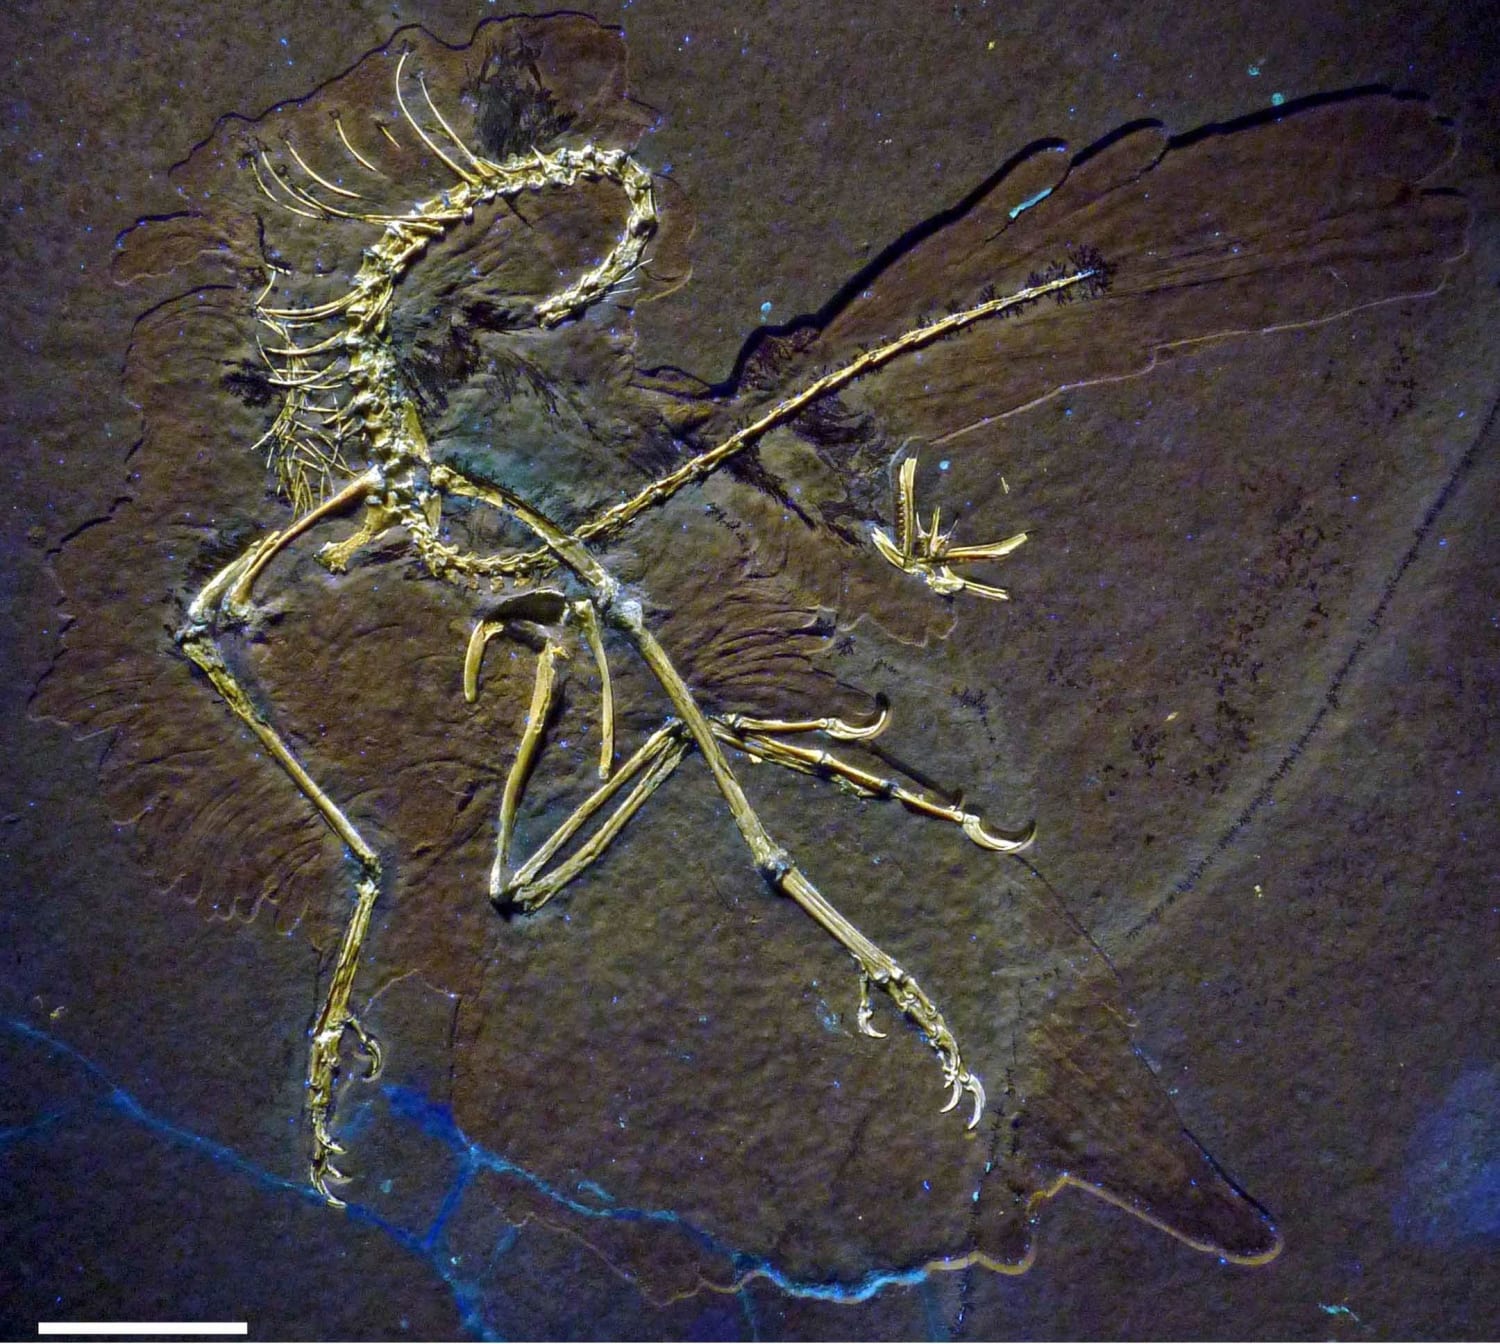 Fossil Study Confirms Archaeopteryx Flew Like a Bird